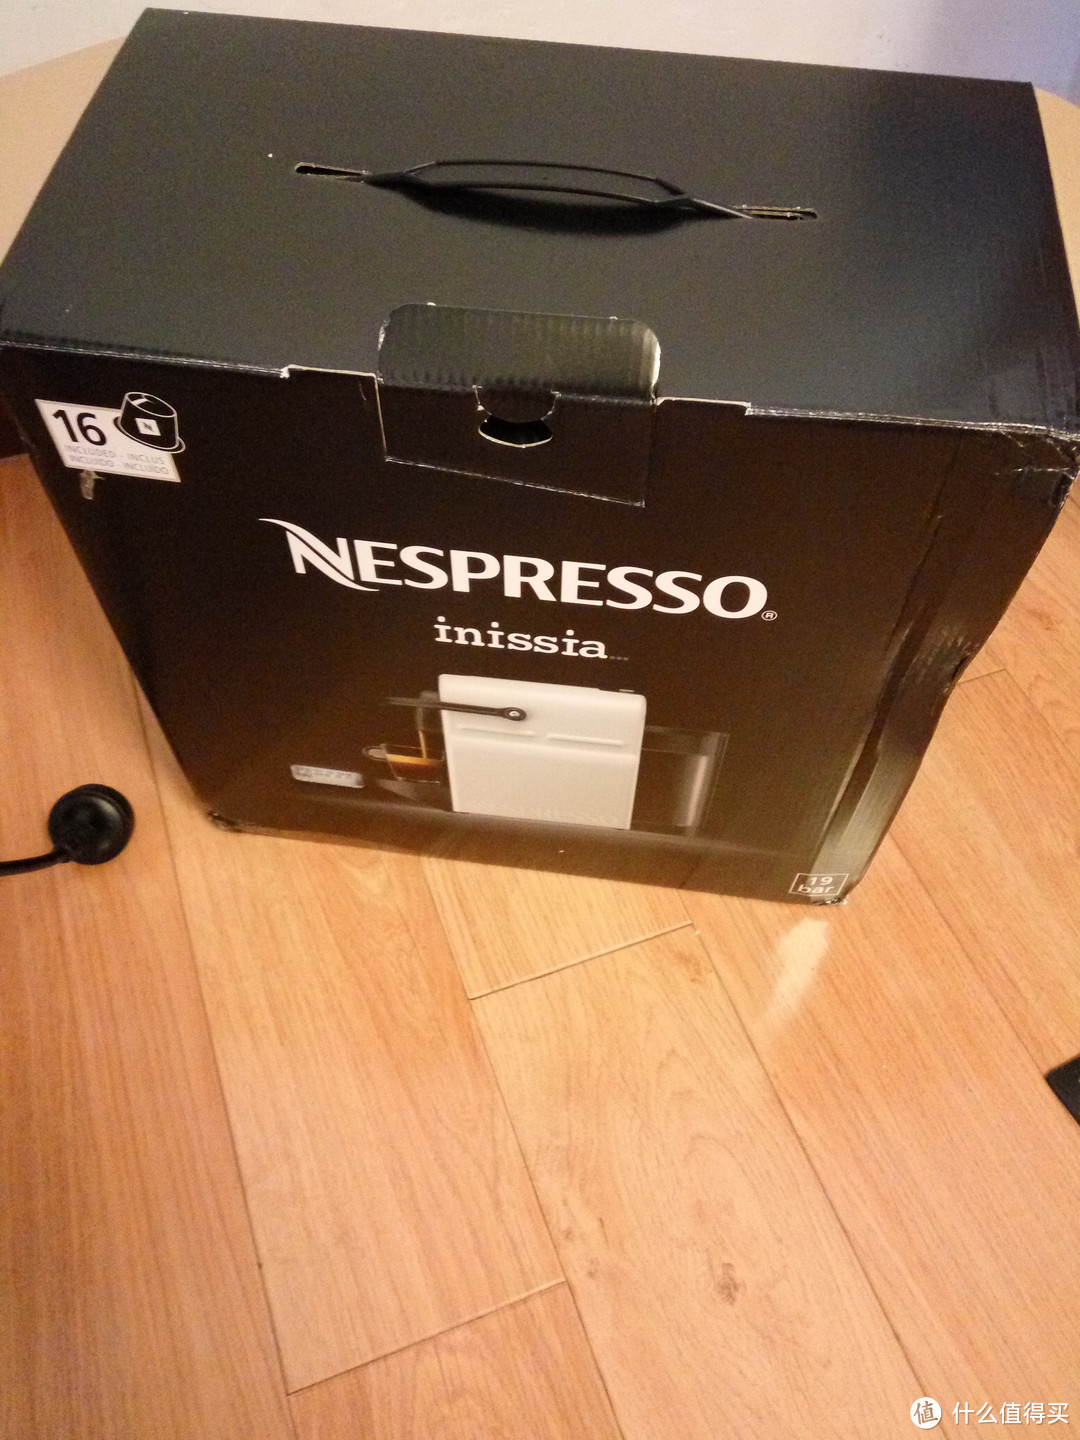 Nestle 雀巢 Nespresso 咖啡机 晒单